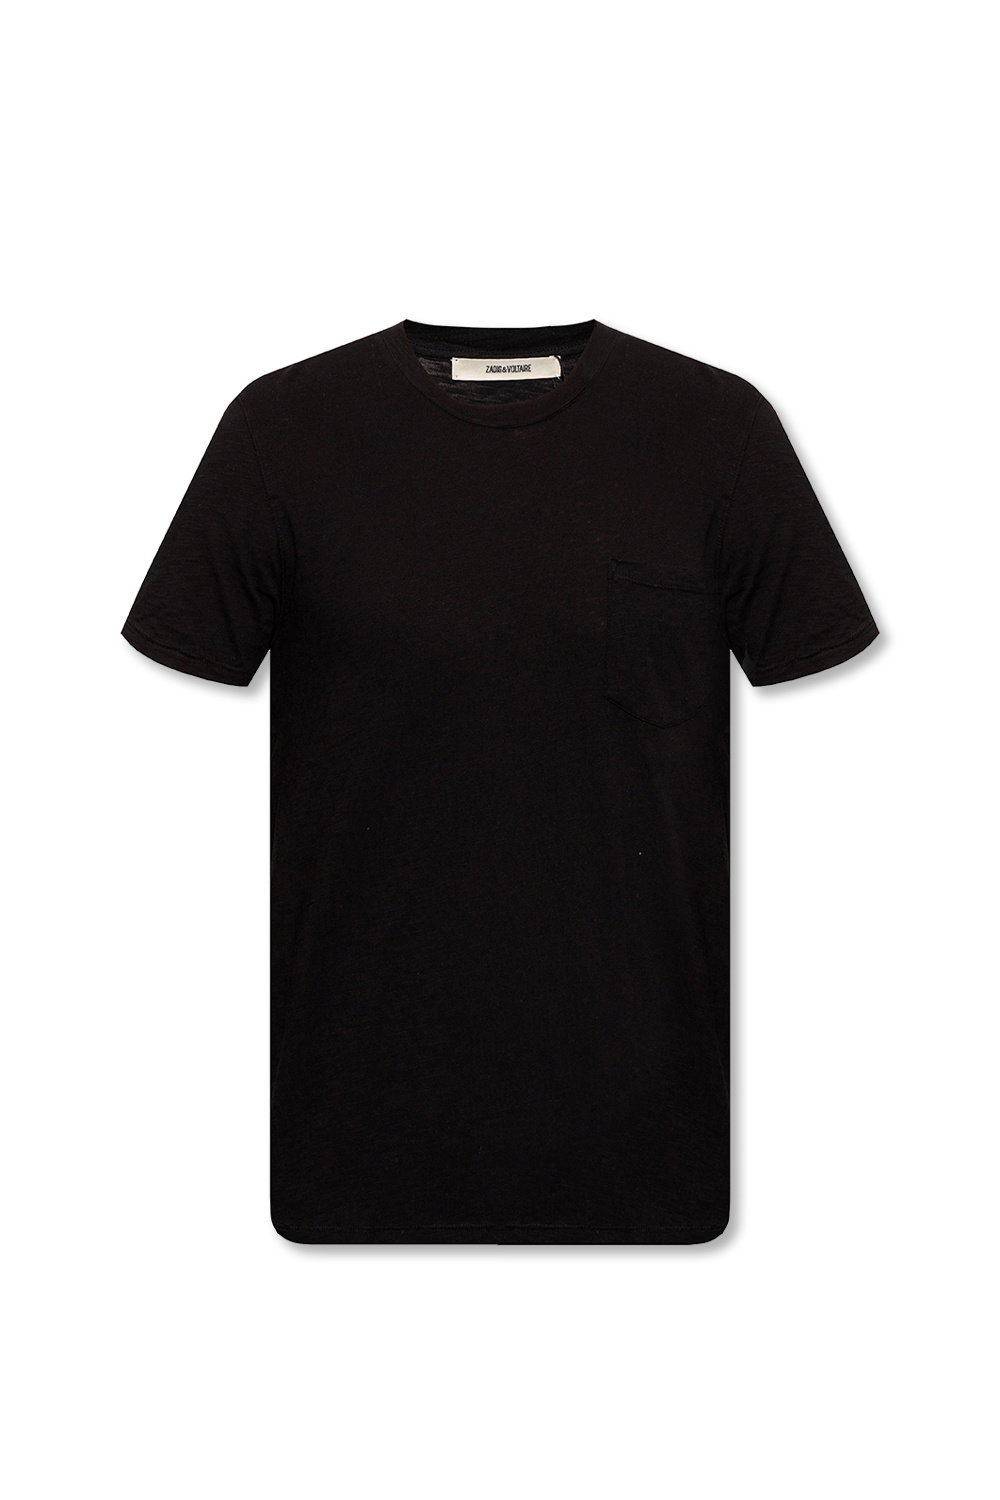 ariana grande nasa merch coachella arichella hoodie sweater t shirt ‘Stockholm’ T-shirt